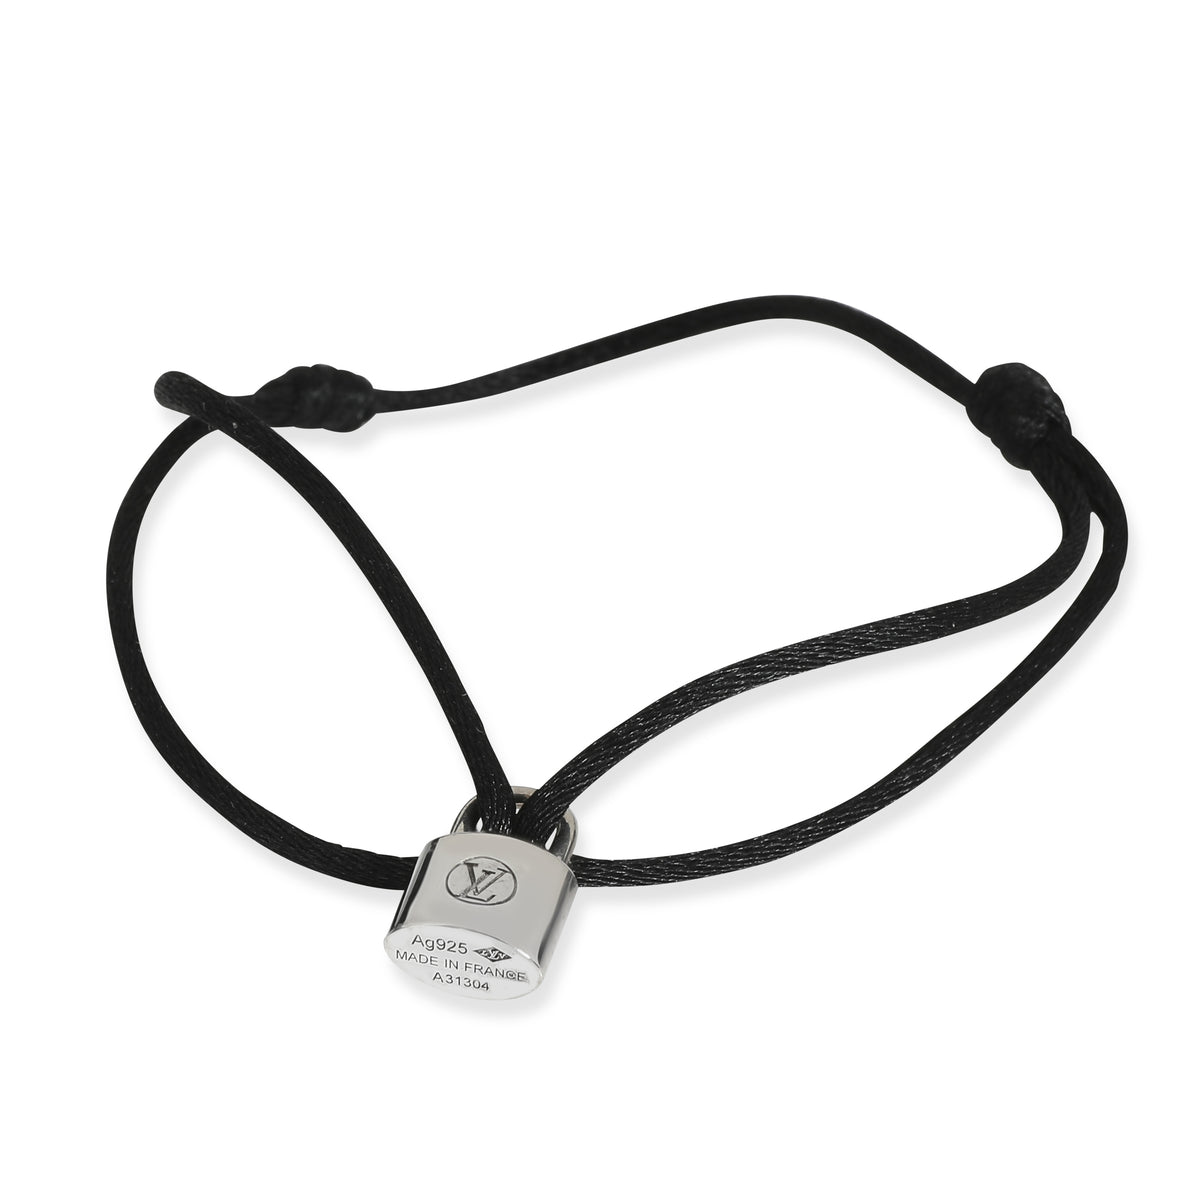 Louis Vuitton Tone Lockit Cord Bracelet in Sterling Silver by WP